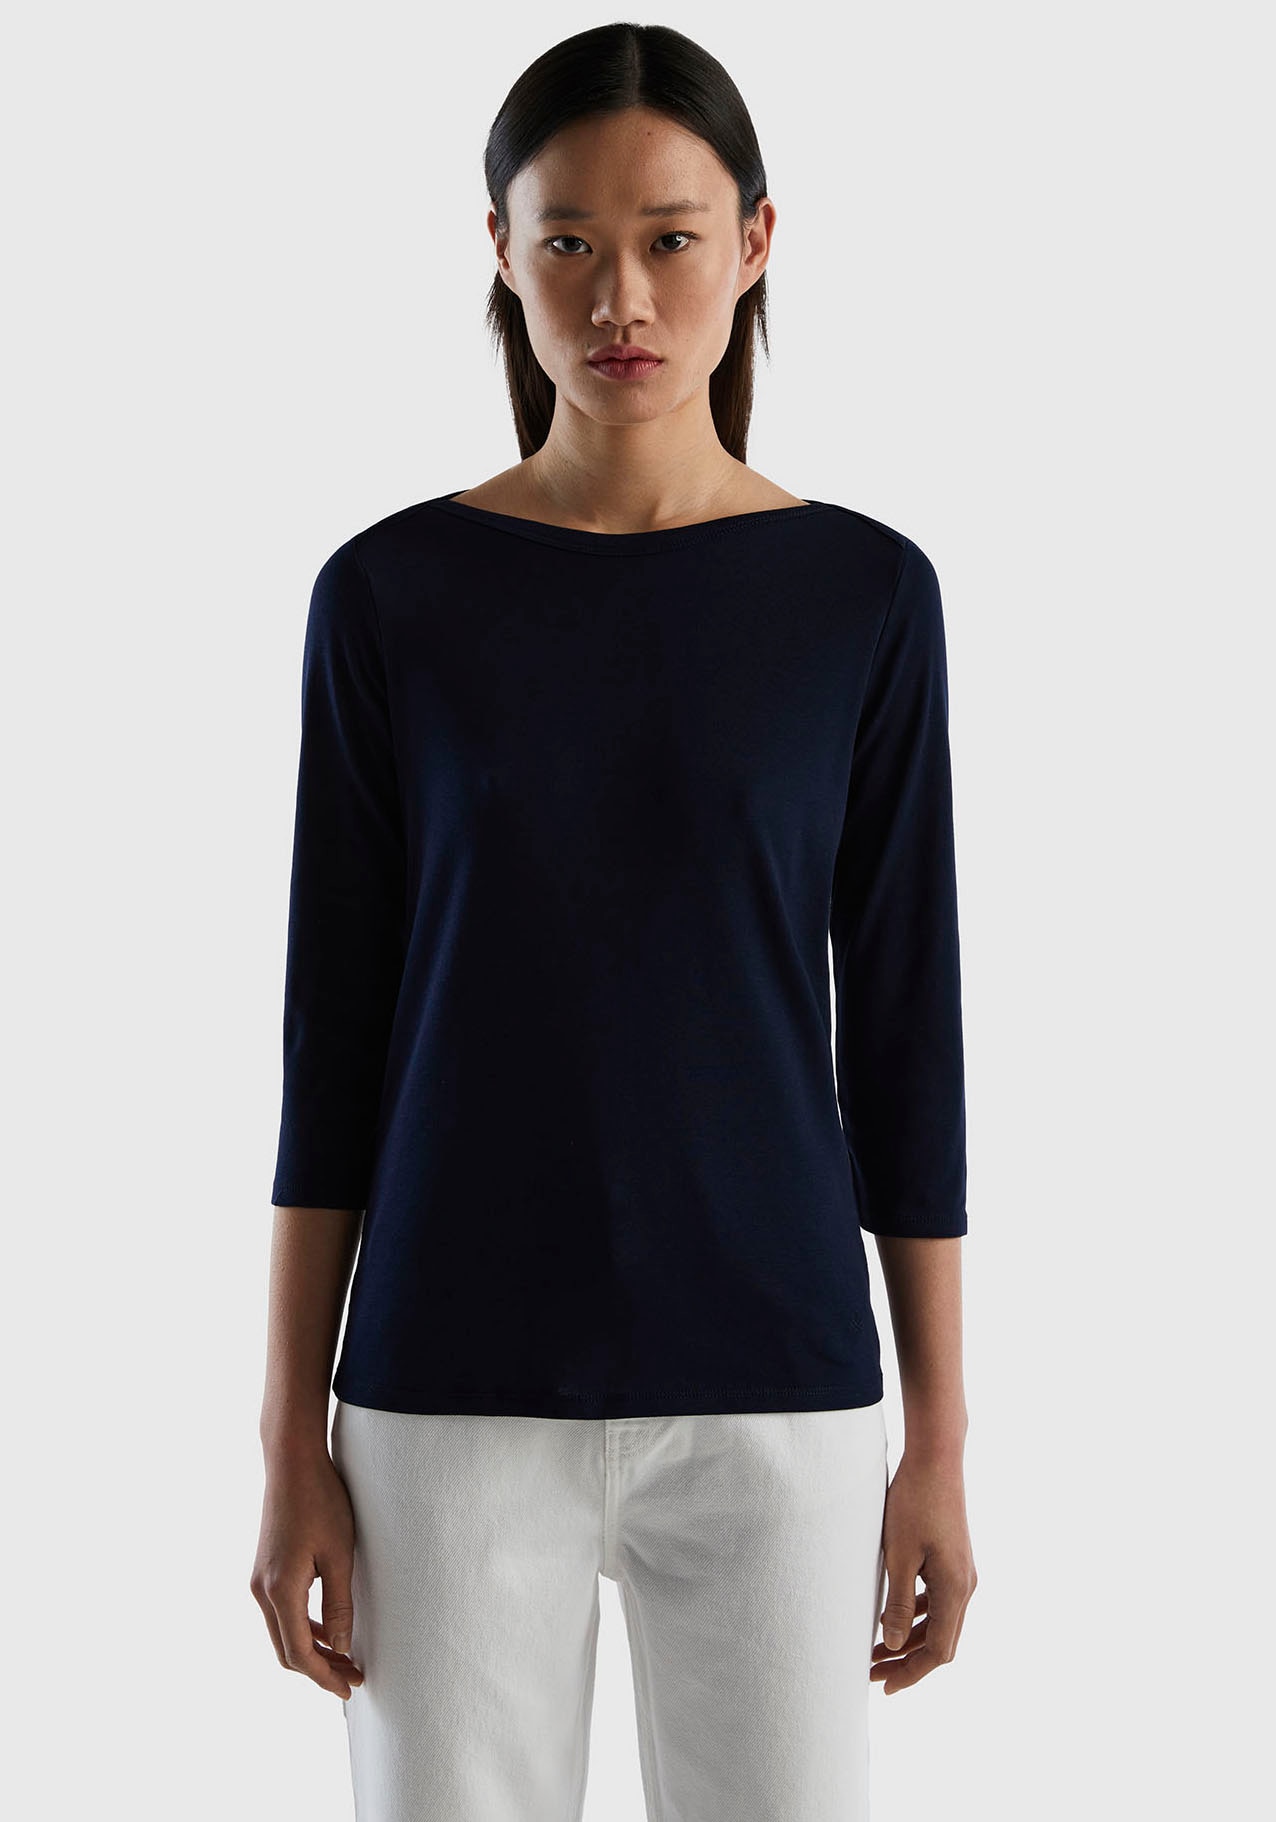 kaufen Basic-Look of United Colors im 3/4-Arm-Shirt, bequem Benetton